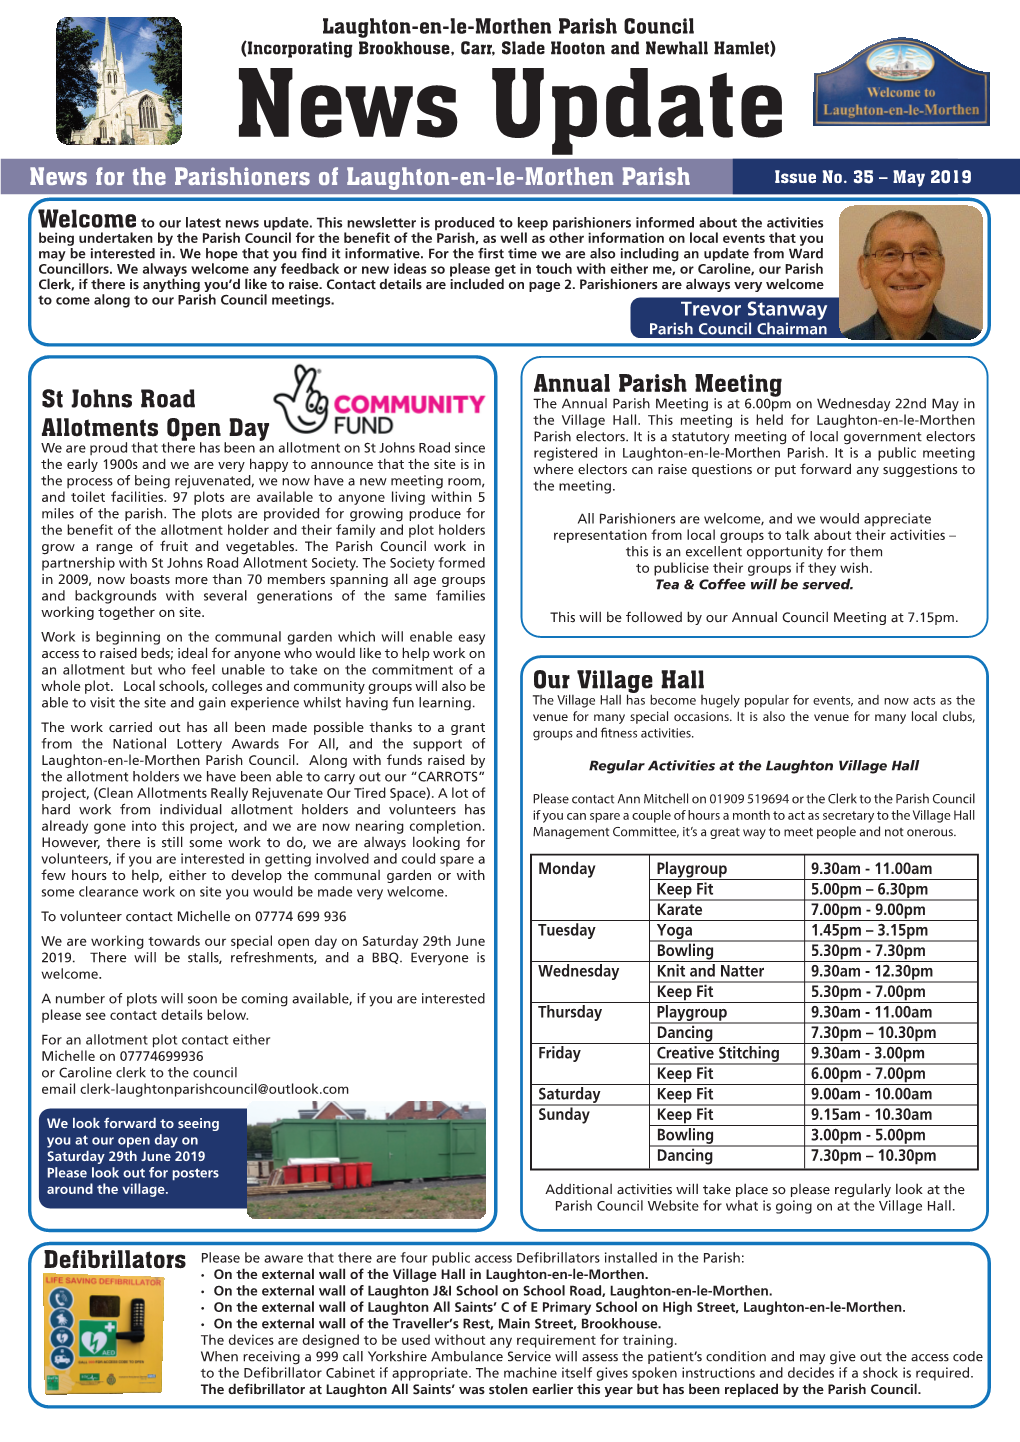 Laughton Parish Council Newsletter 113055.Ai